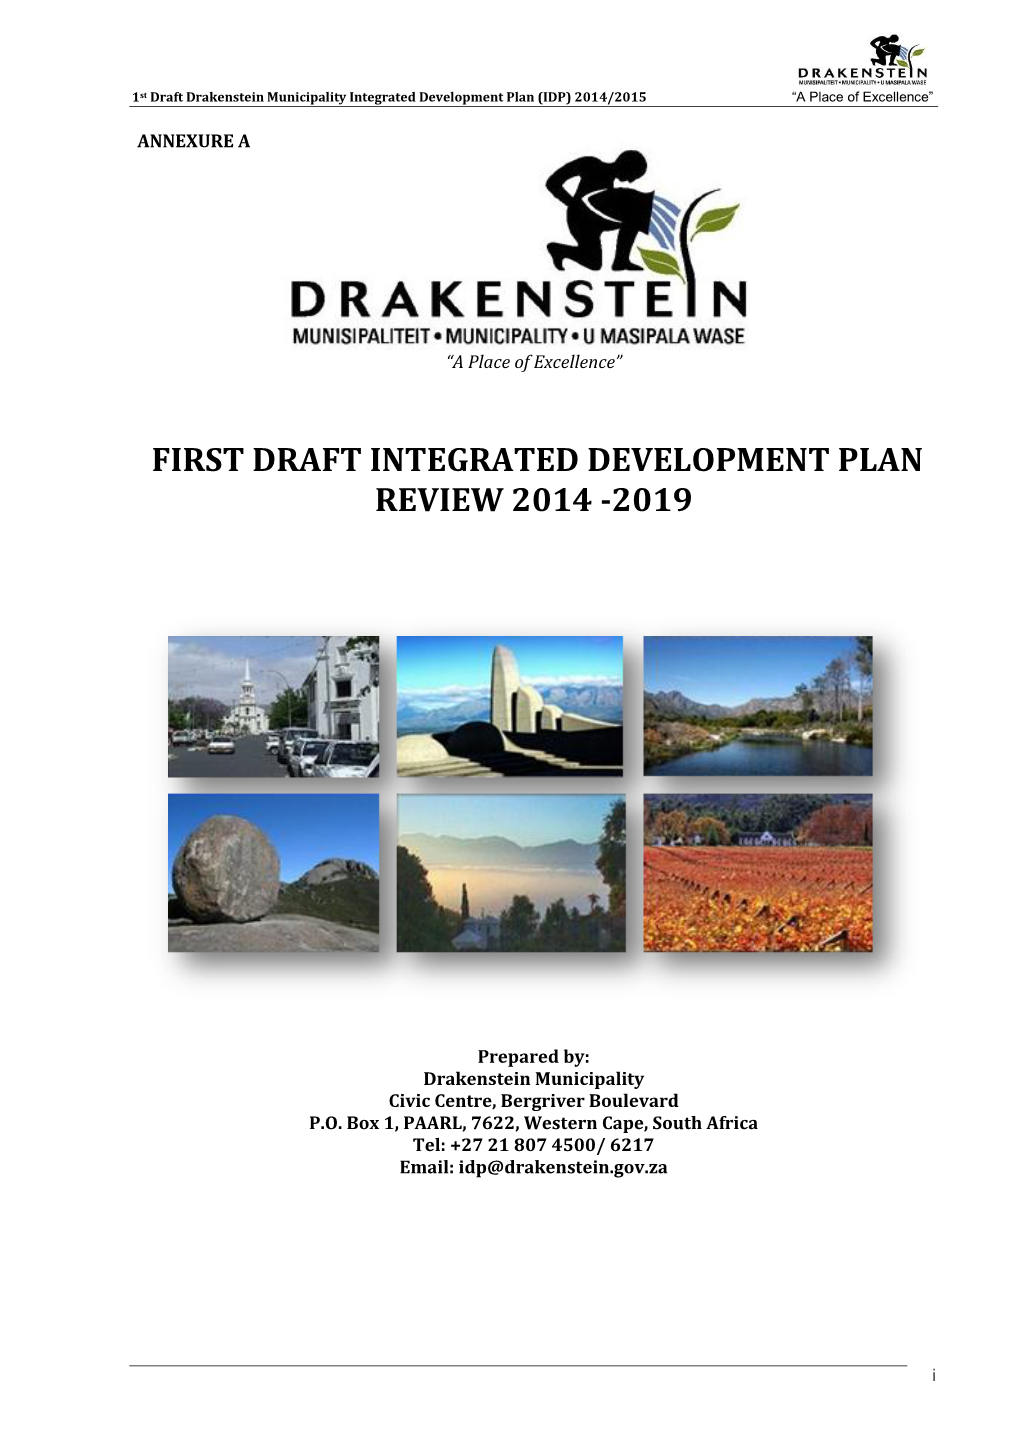 First Draft Integrated Development Plan Review 2014 -2019